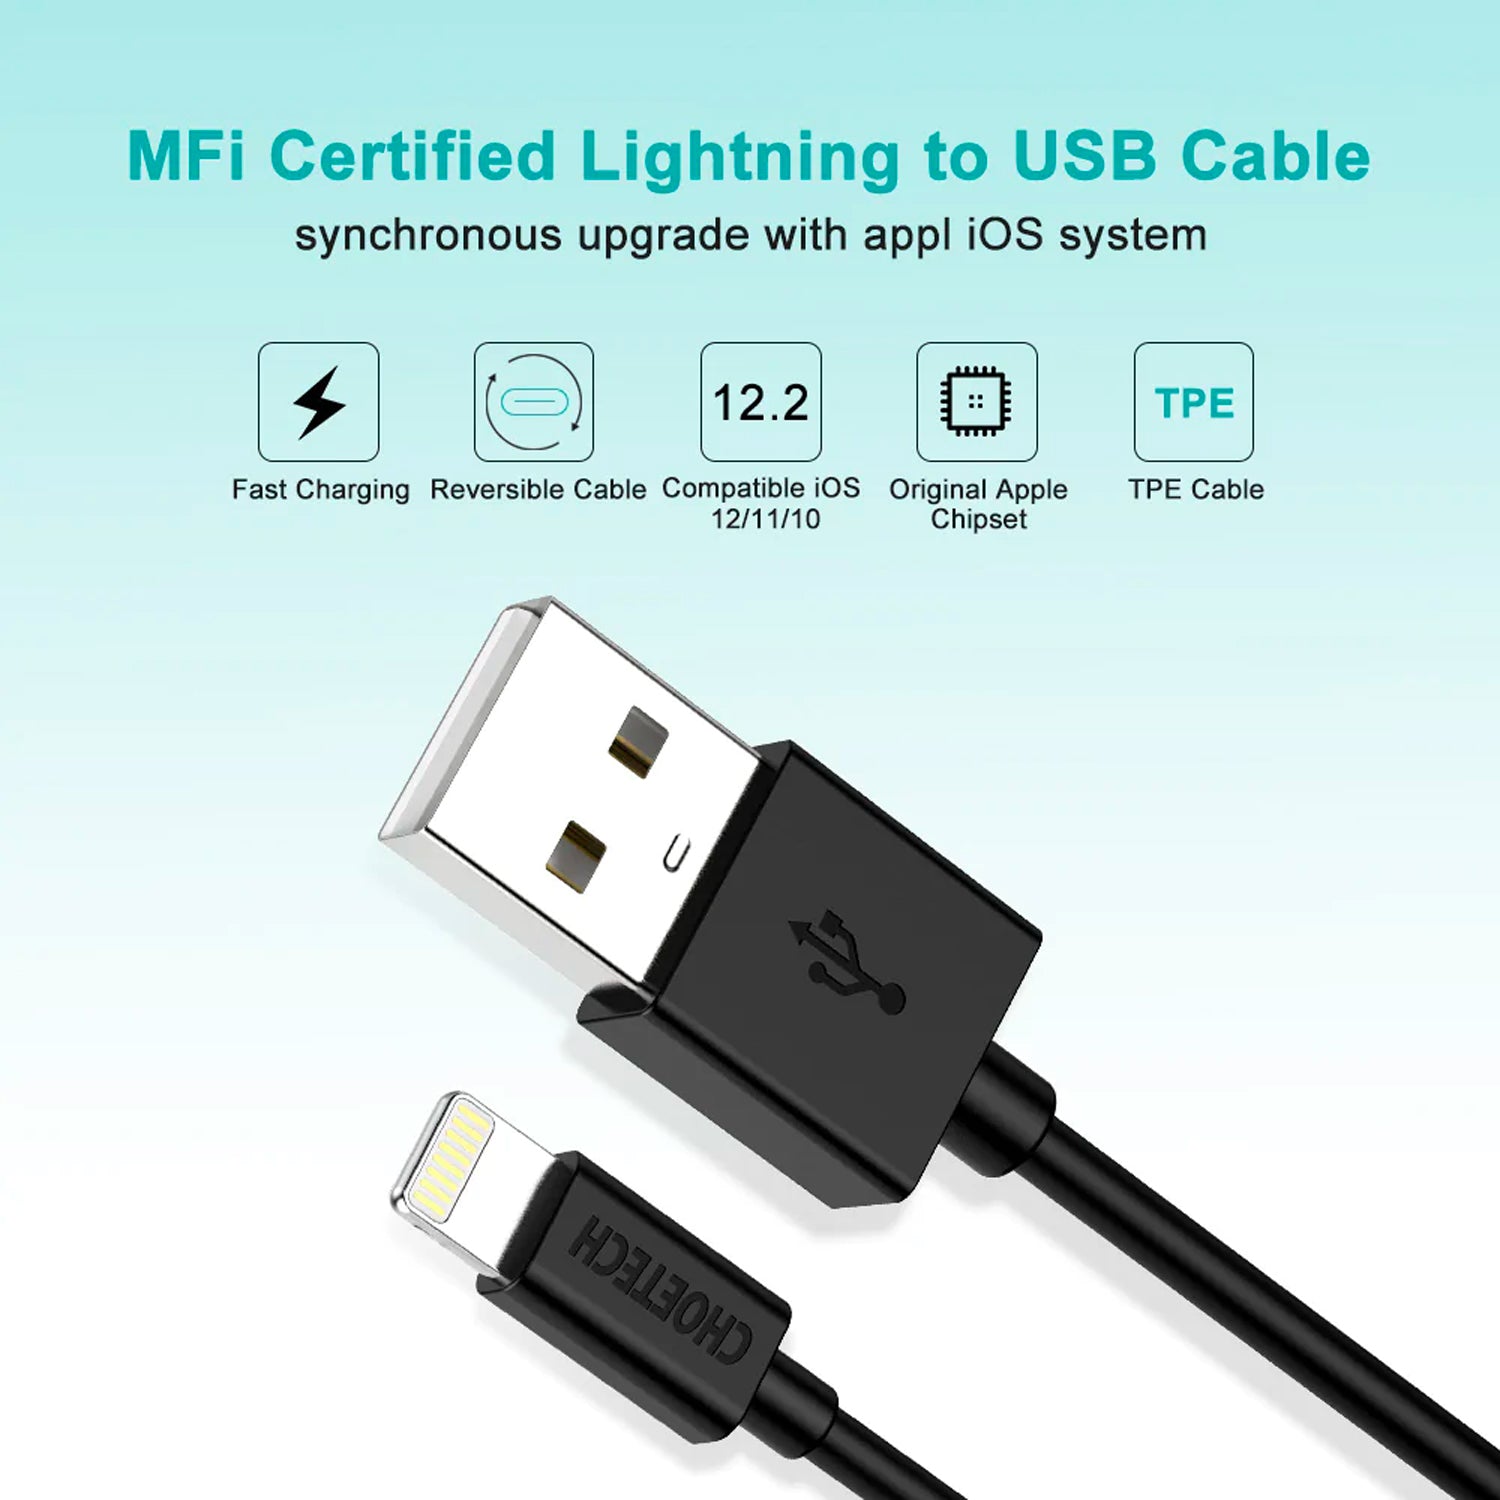 Choetech USB-A to Lightning Cable 1.8m MFI Black